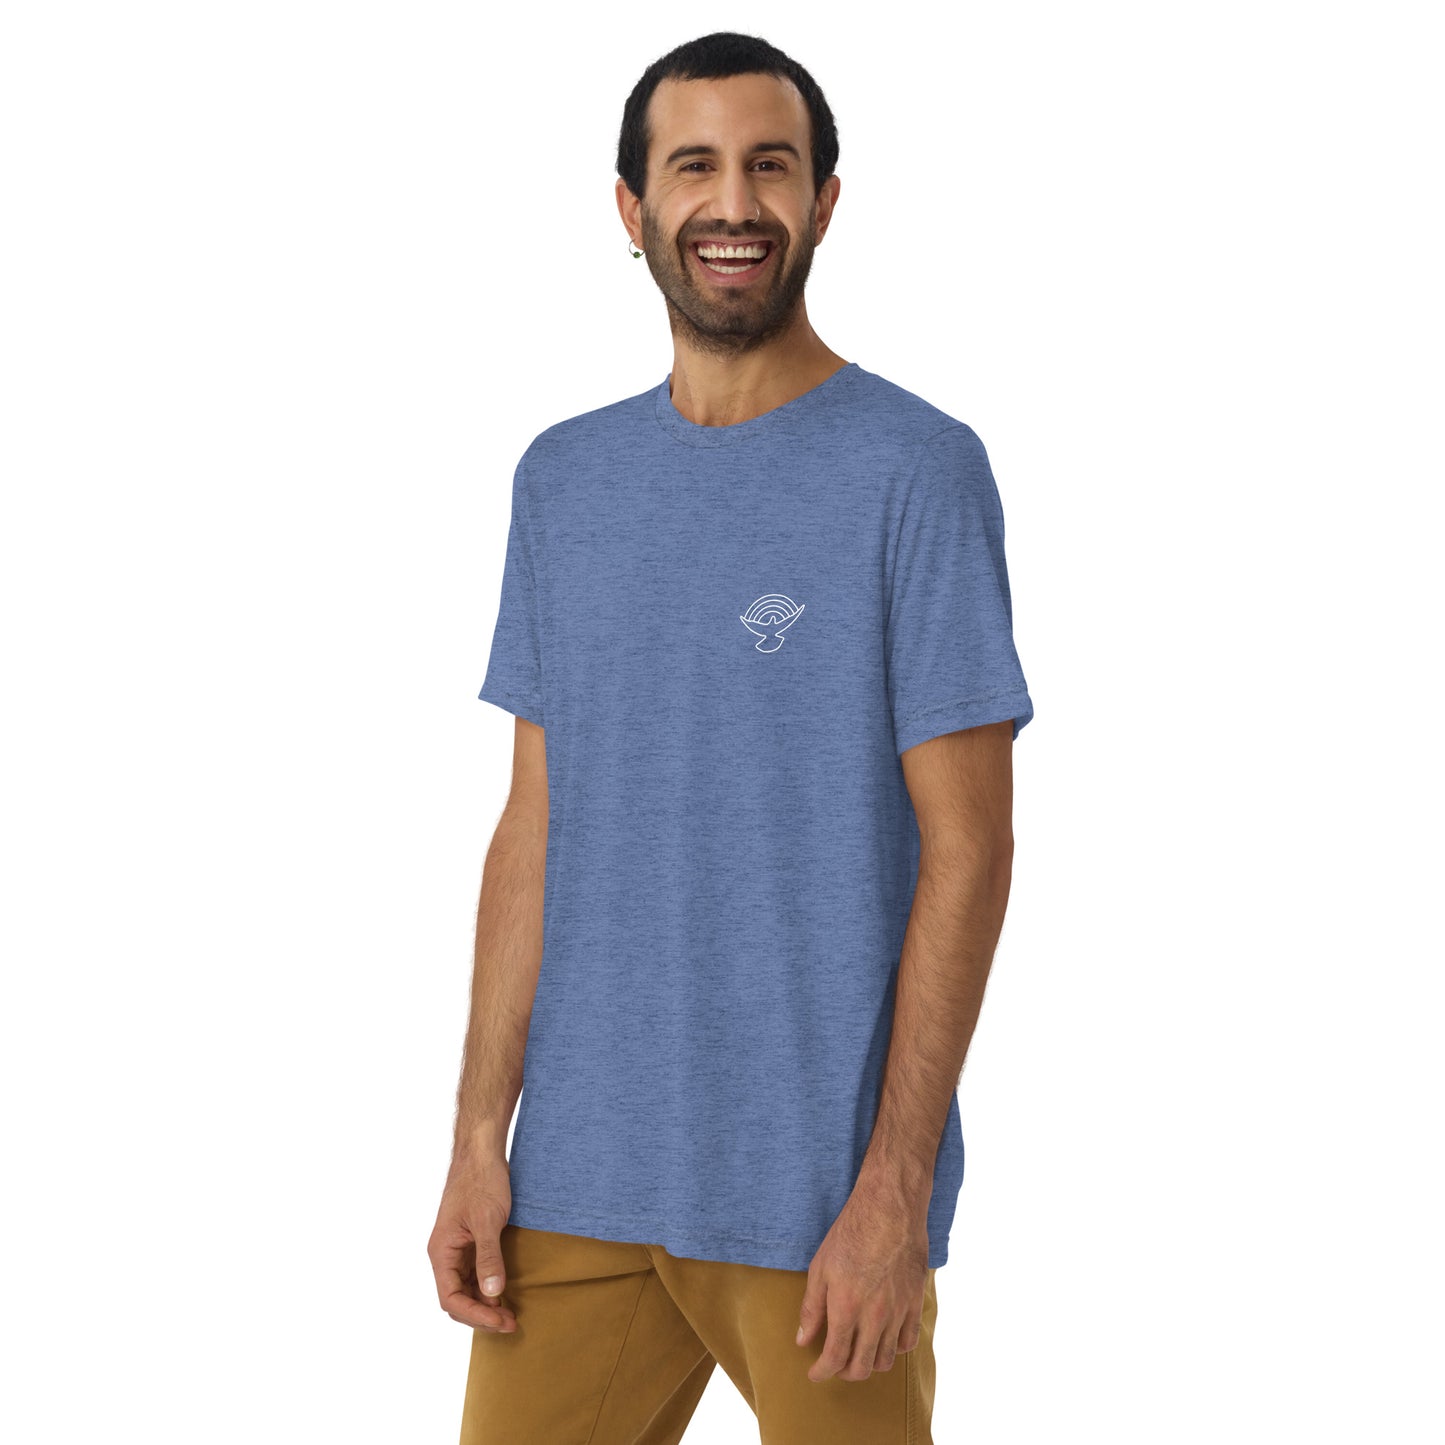 Iris Global Core Values Unisex tri-blend t-shirt